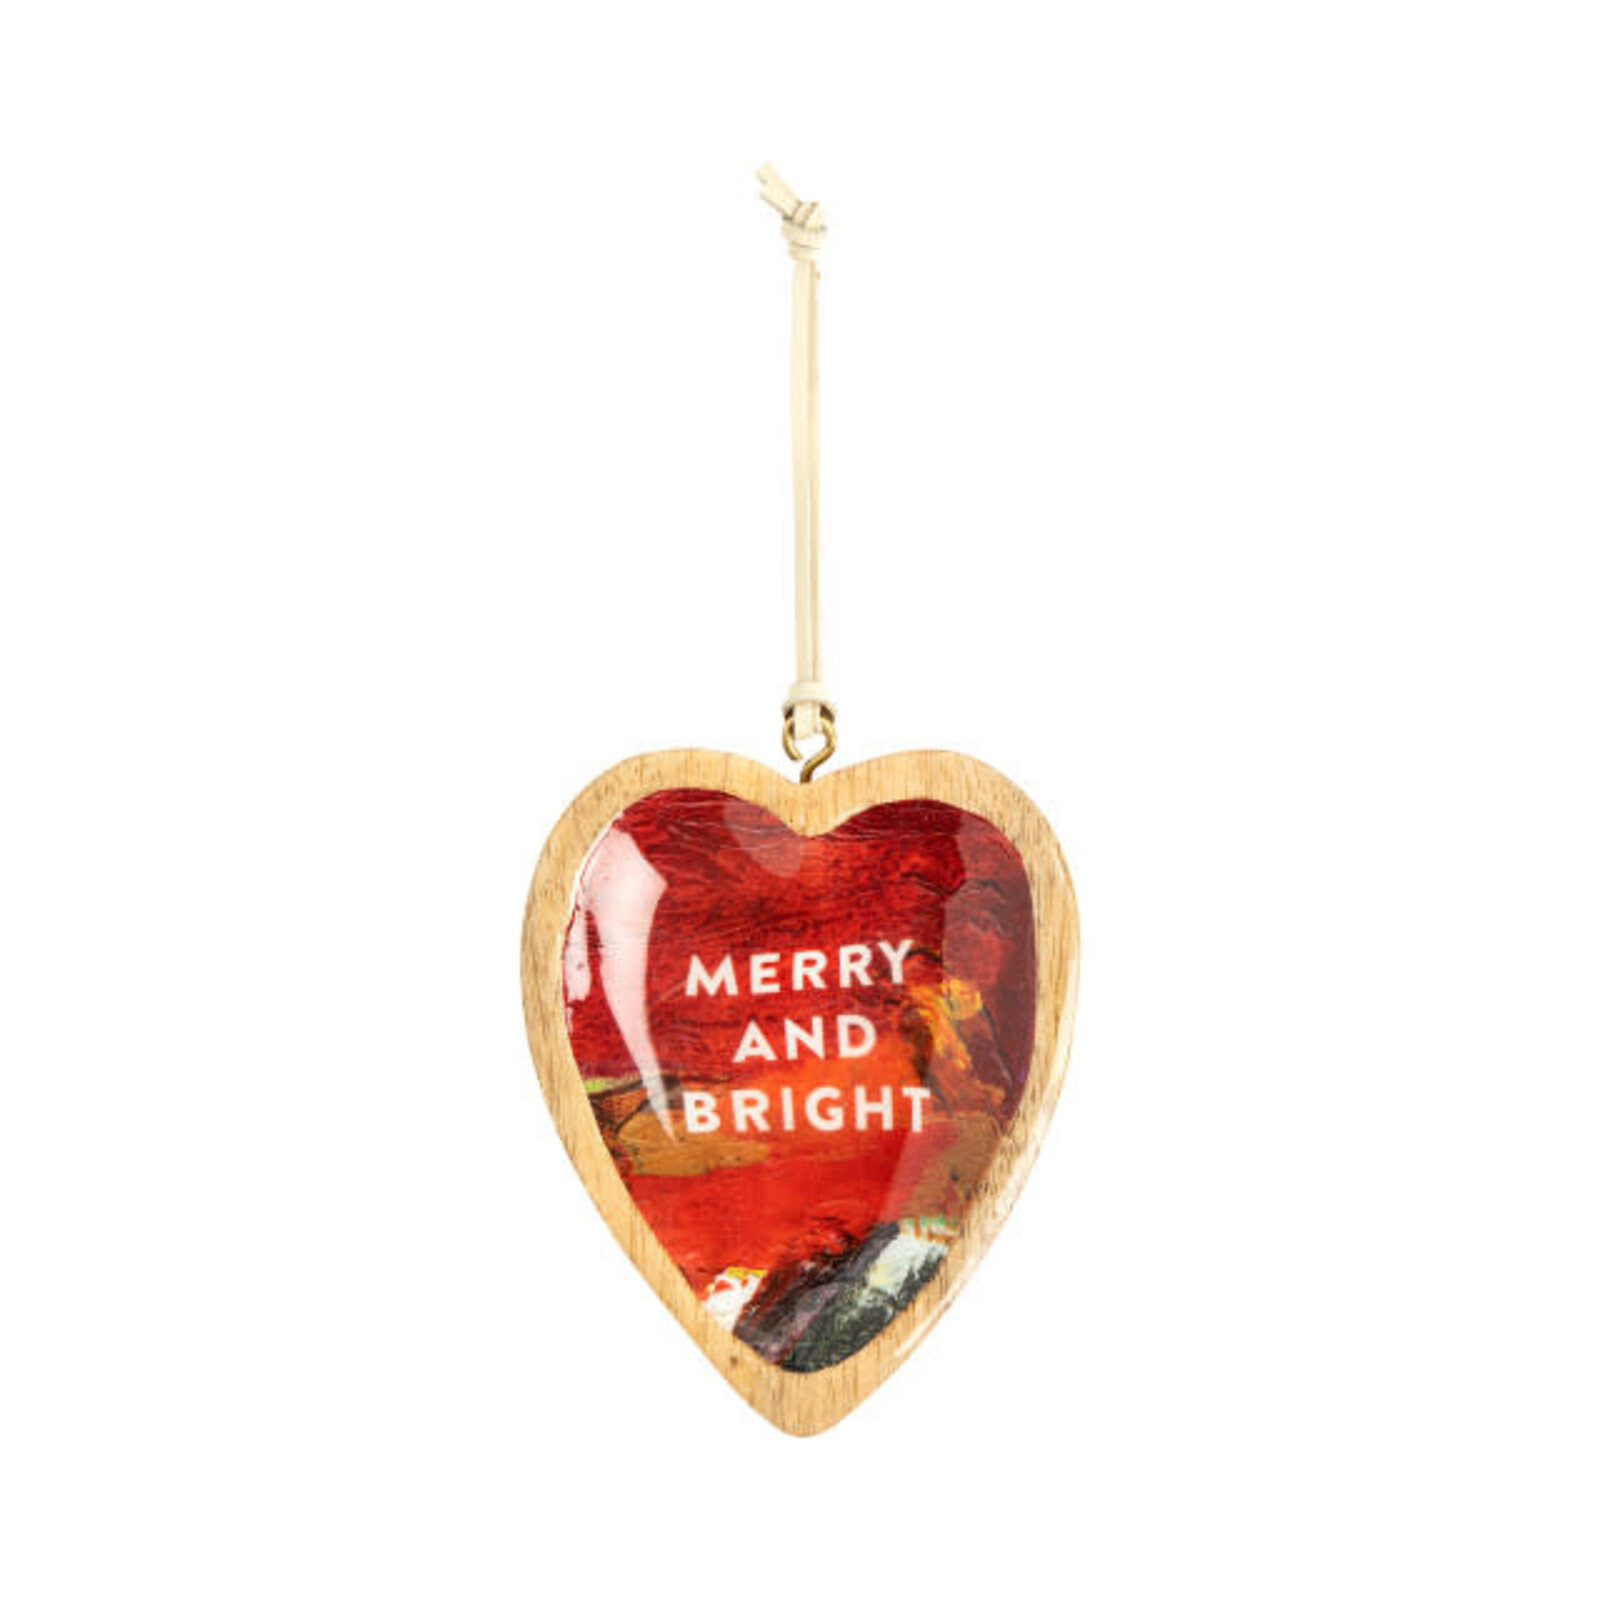 Grace Goad ArtLifting Heart Ornament - Warm Winter Heart   2020220613 loading=